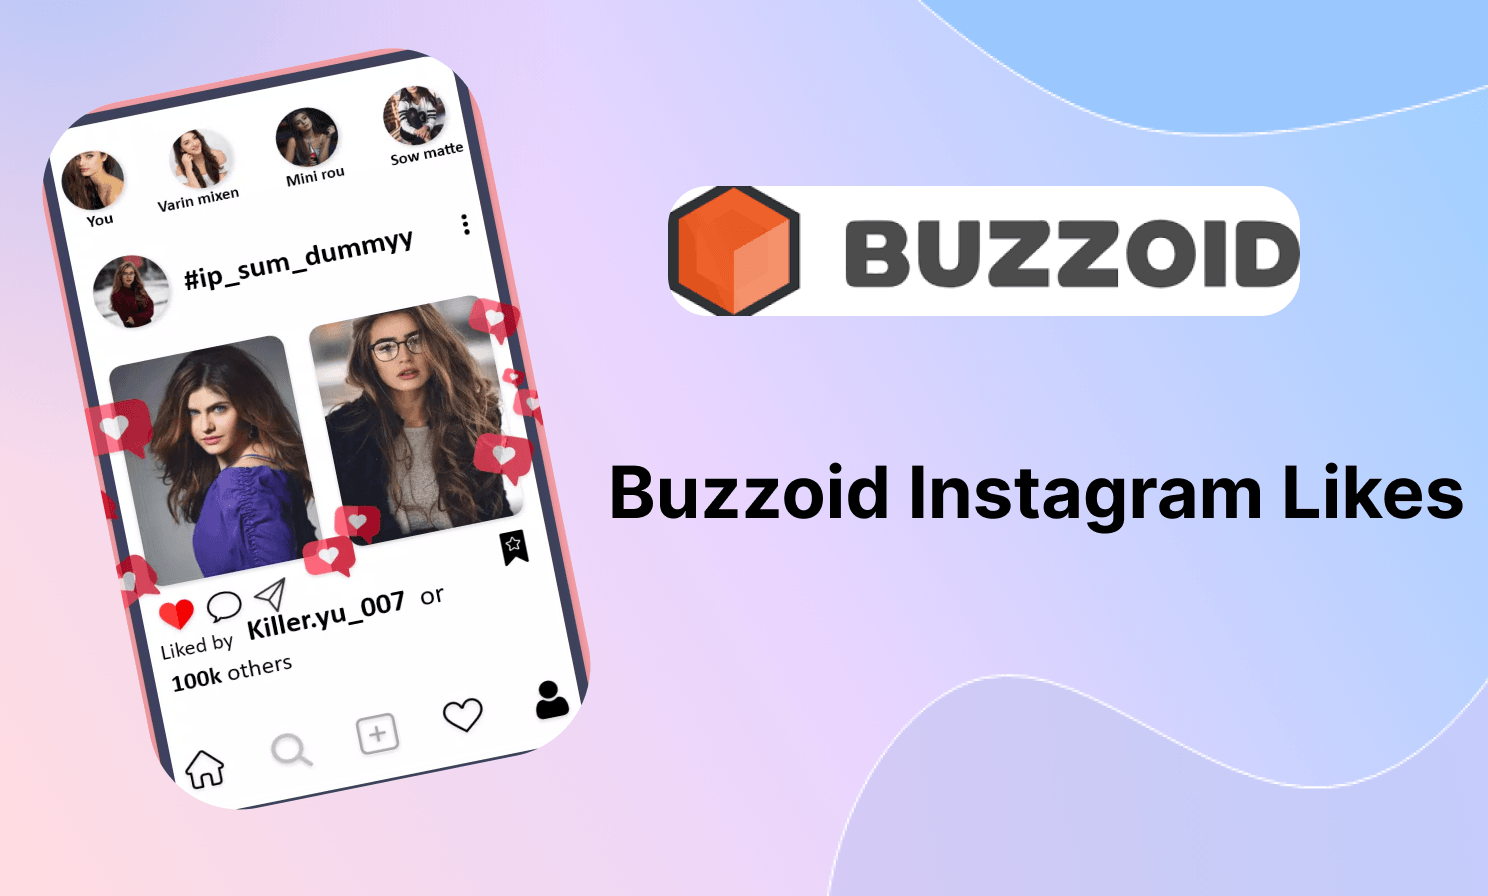 Buzzoid Instagram Likes